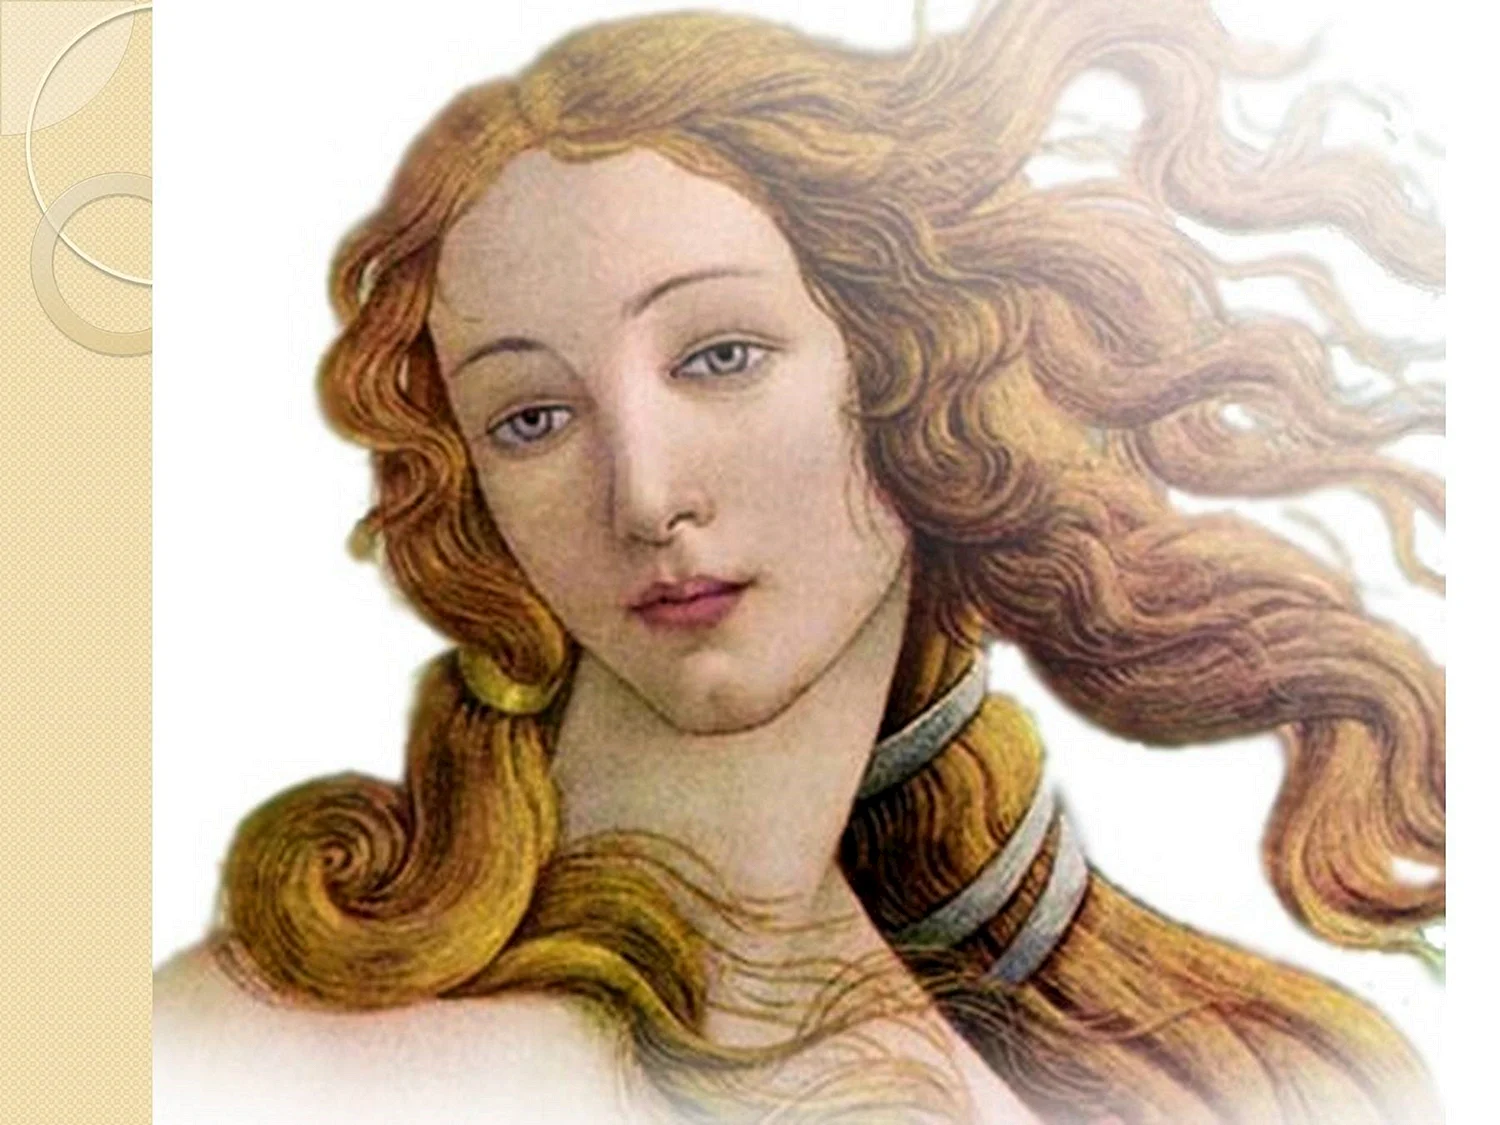 Богиня Афродита Венера